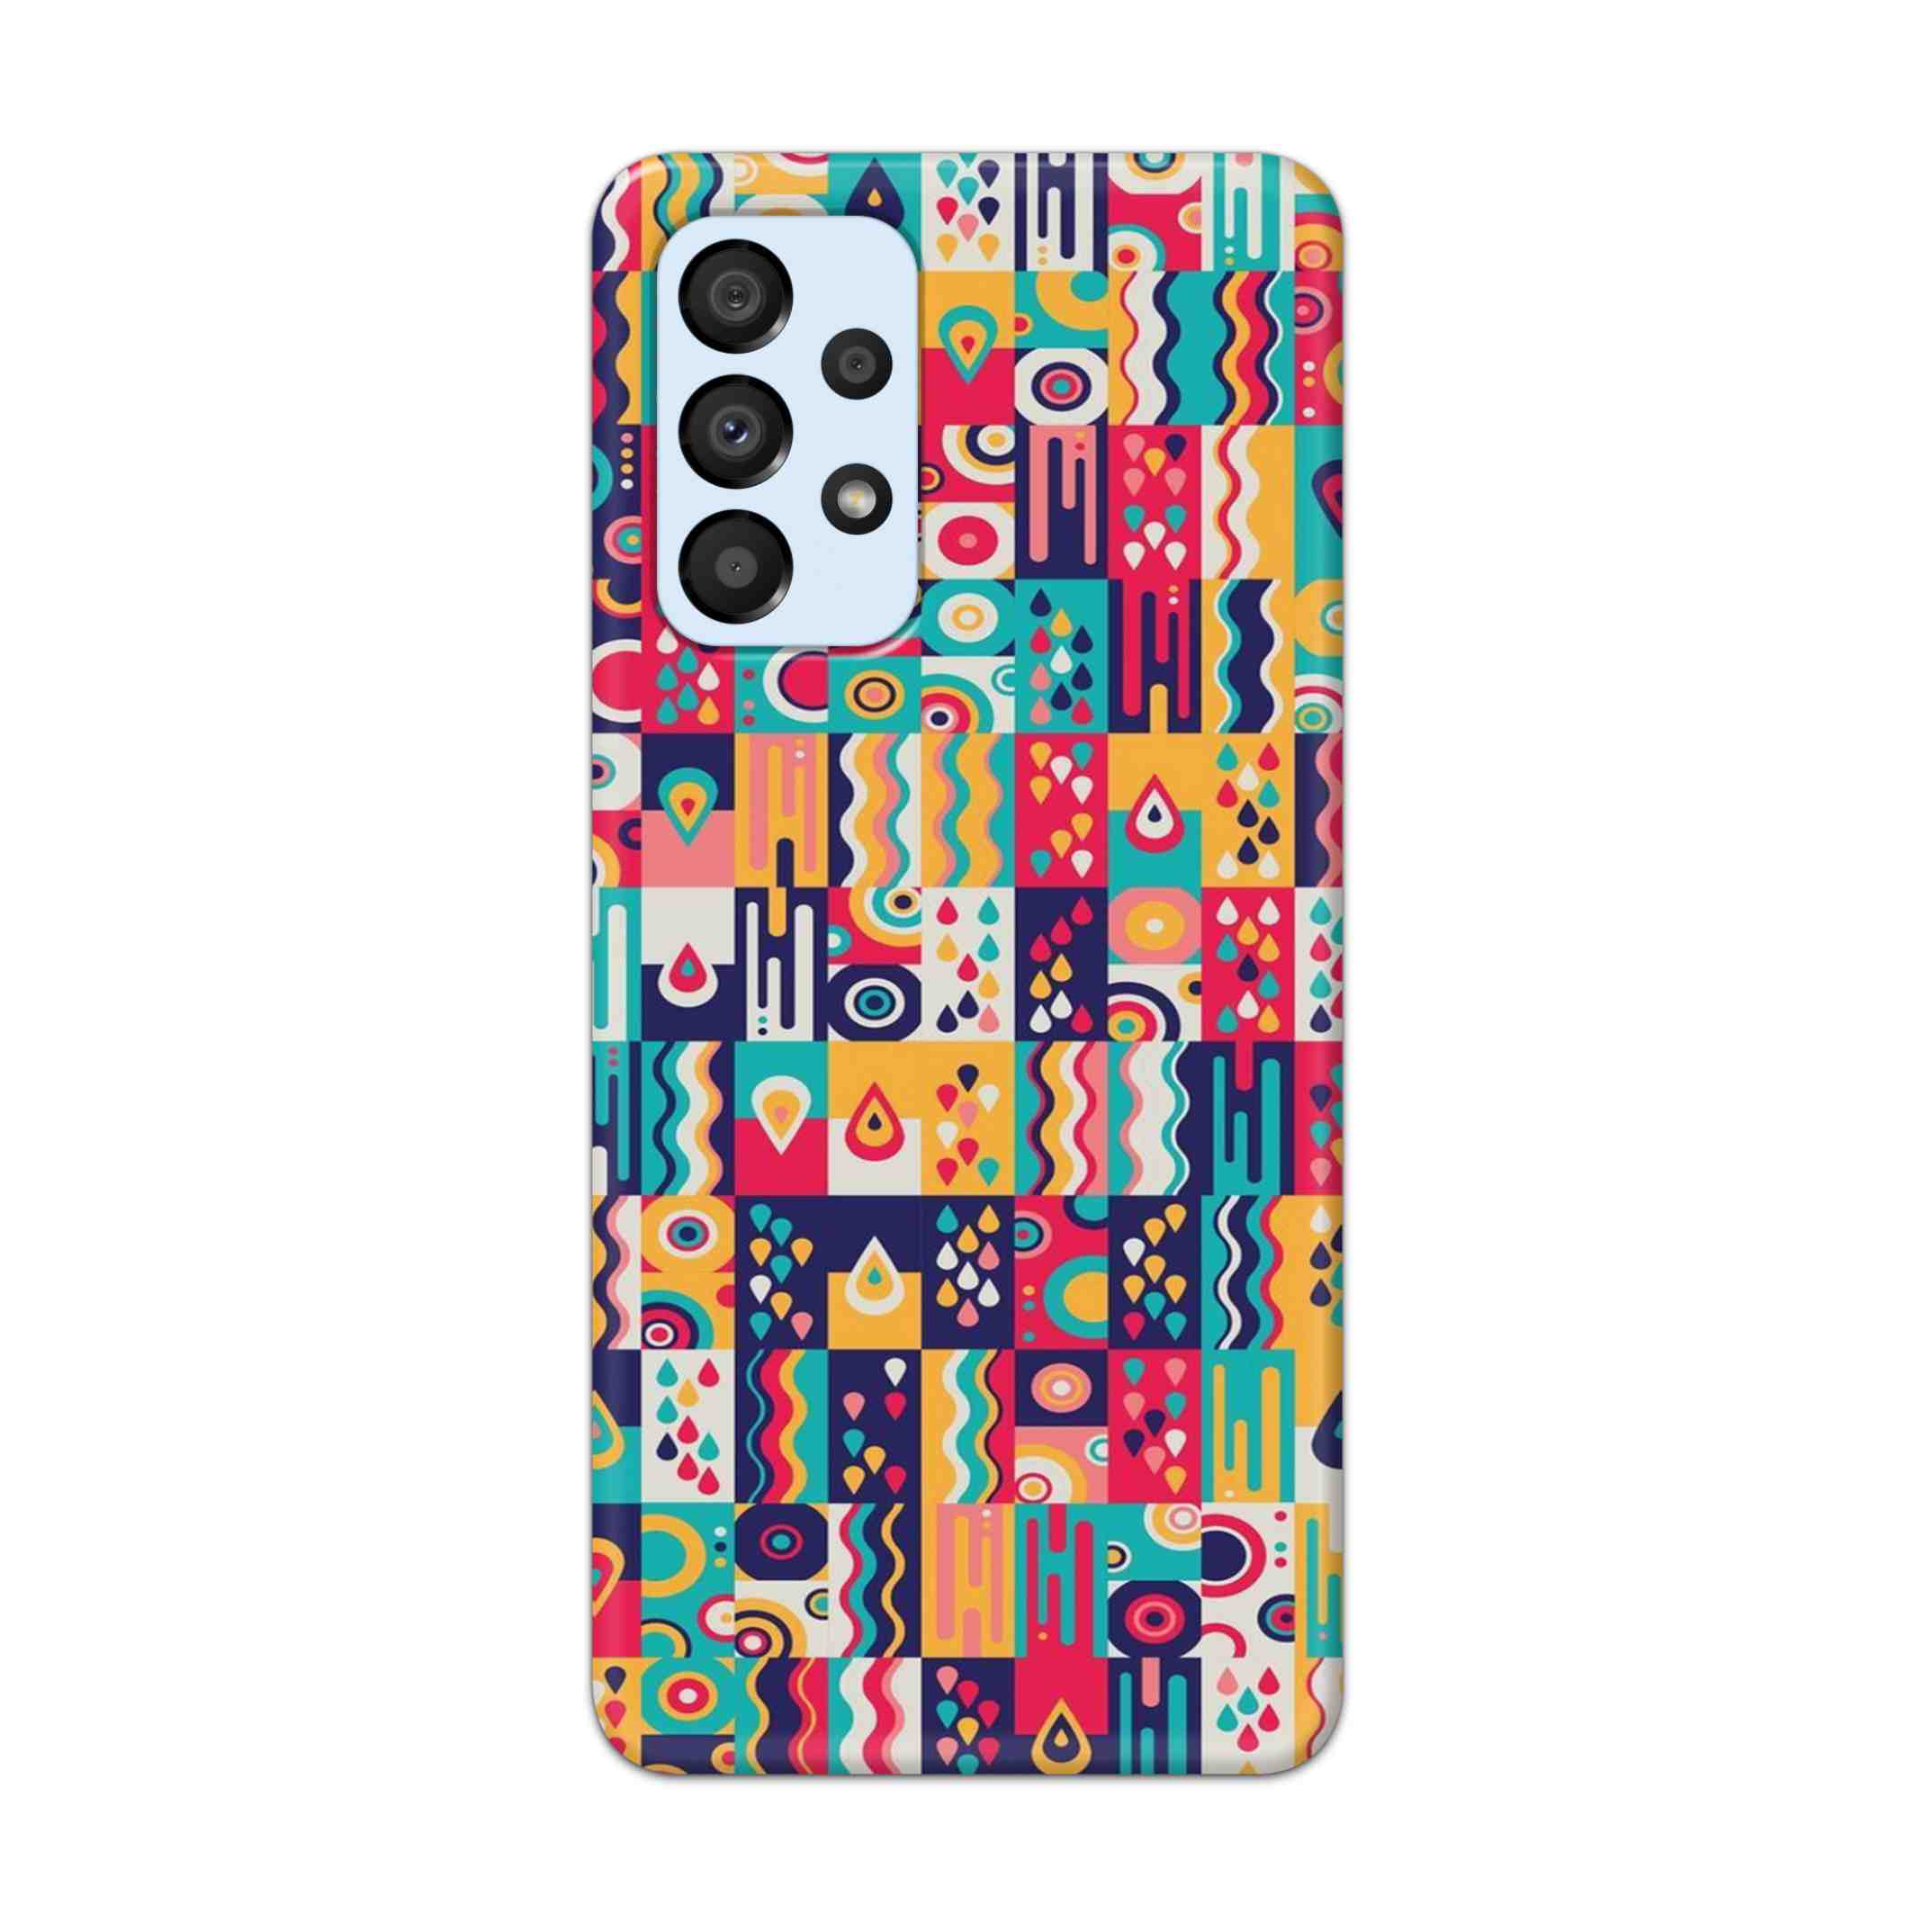 Buy Art Hard Back Mobile Phone Case Cover For Samsung A33 5G Online